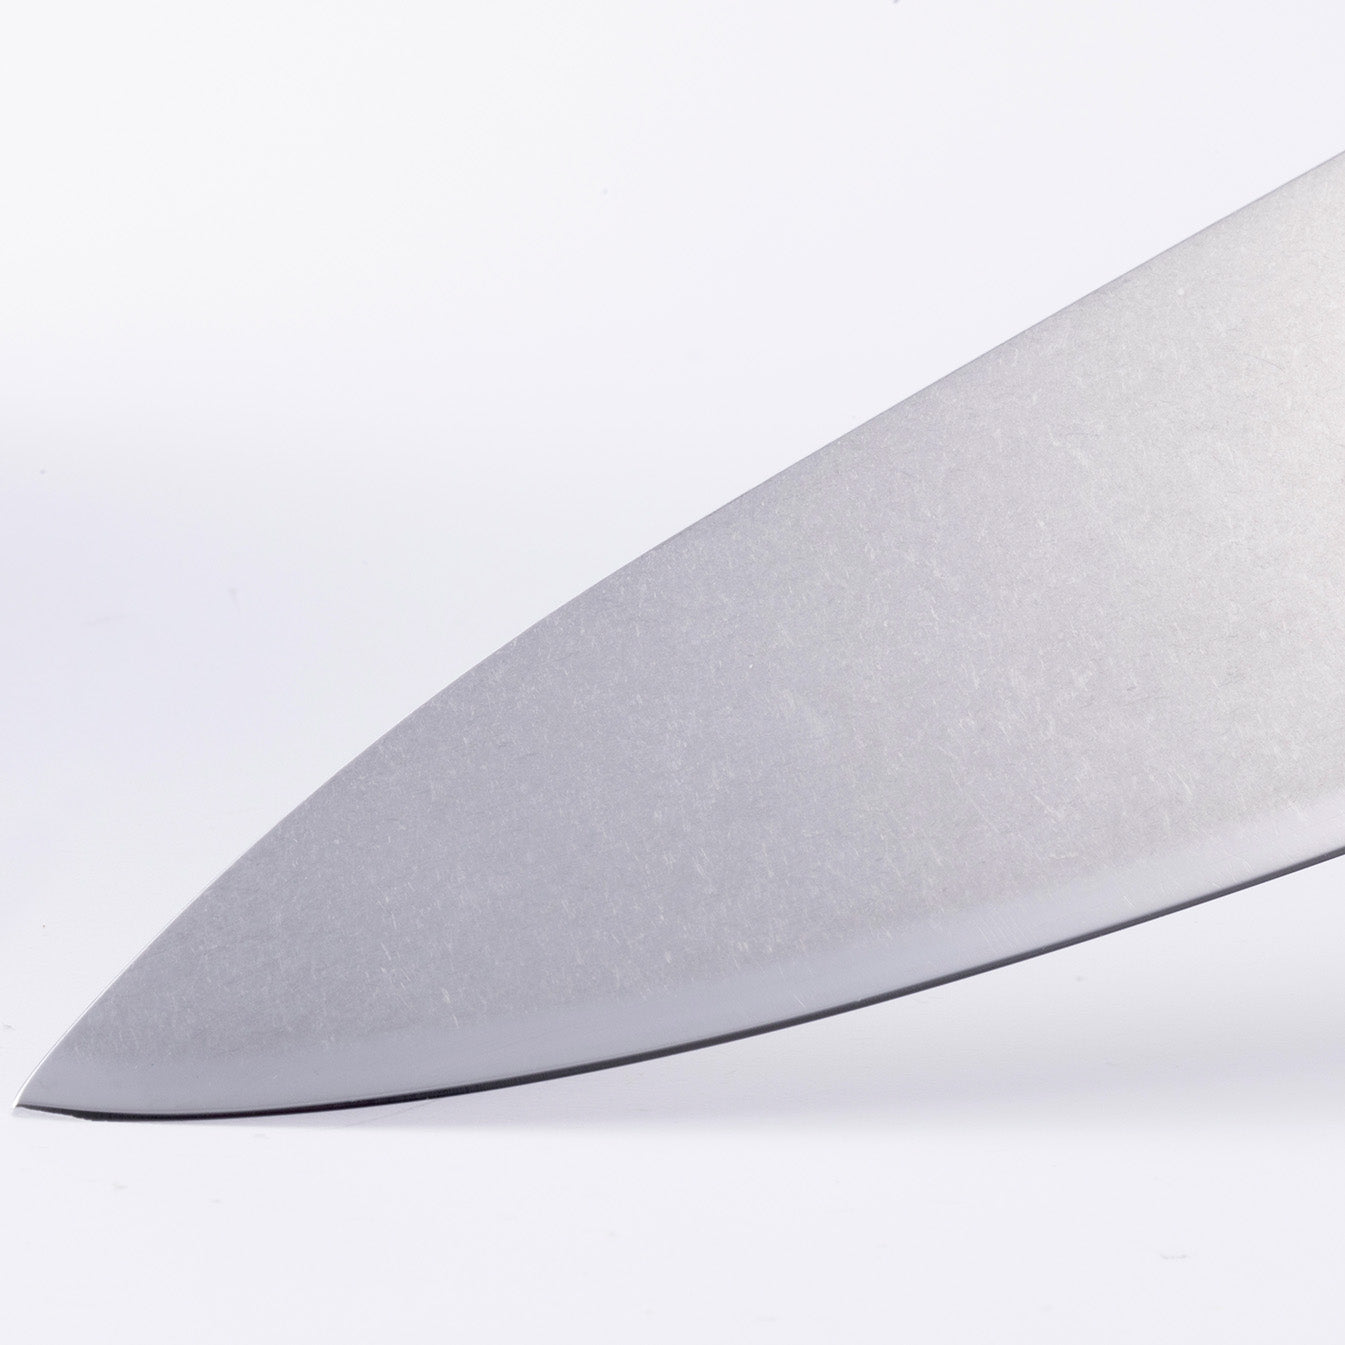 Messermeister Custom 8 inch Chefs Knife Blade View